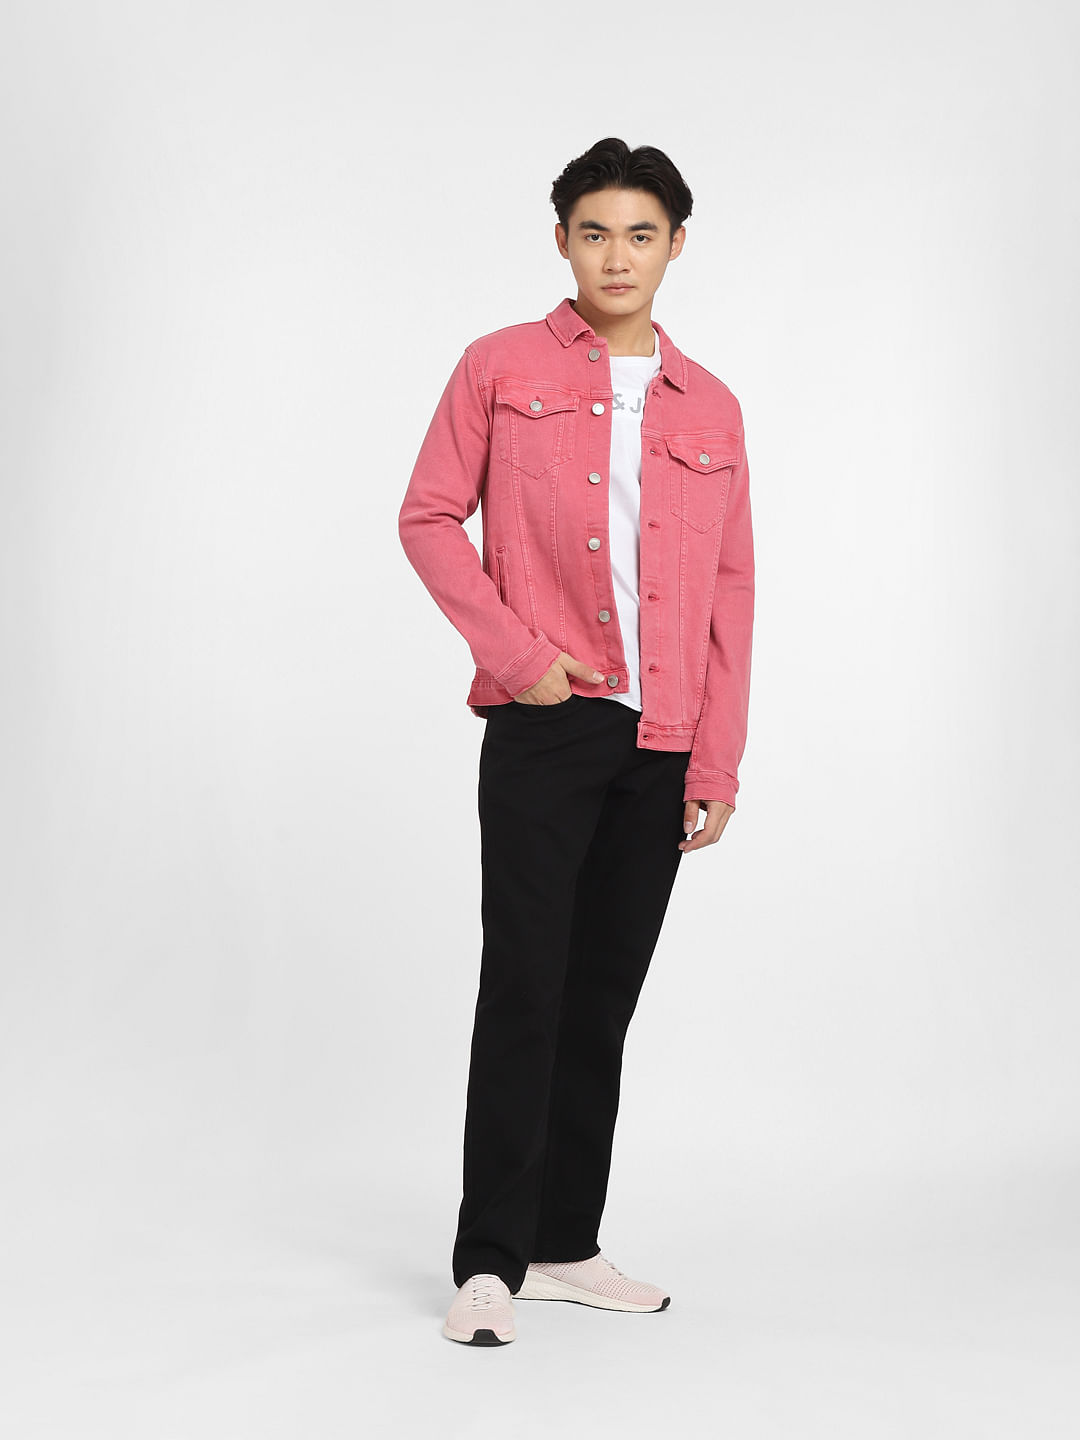 J BRAND Harlow Shrunken and Distressed Denim Jacket In Teaser, Dust Pink,  Medium | eBay